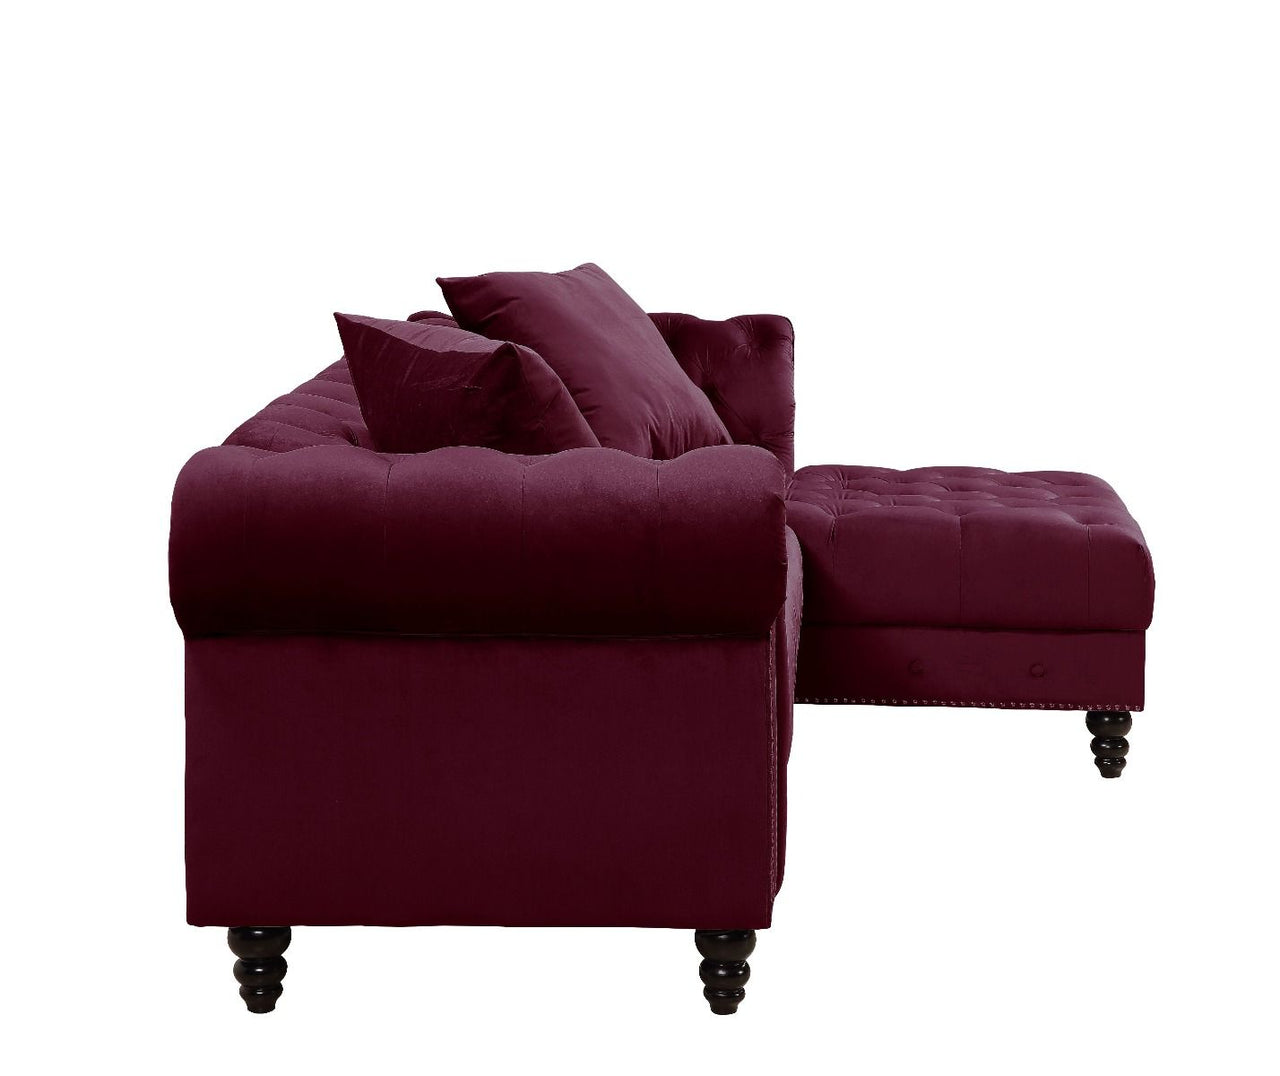 Adnelis - Sectional Sofa w/2 Pillows - Tony's Home Furnishings